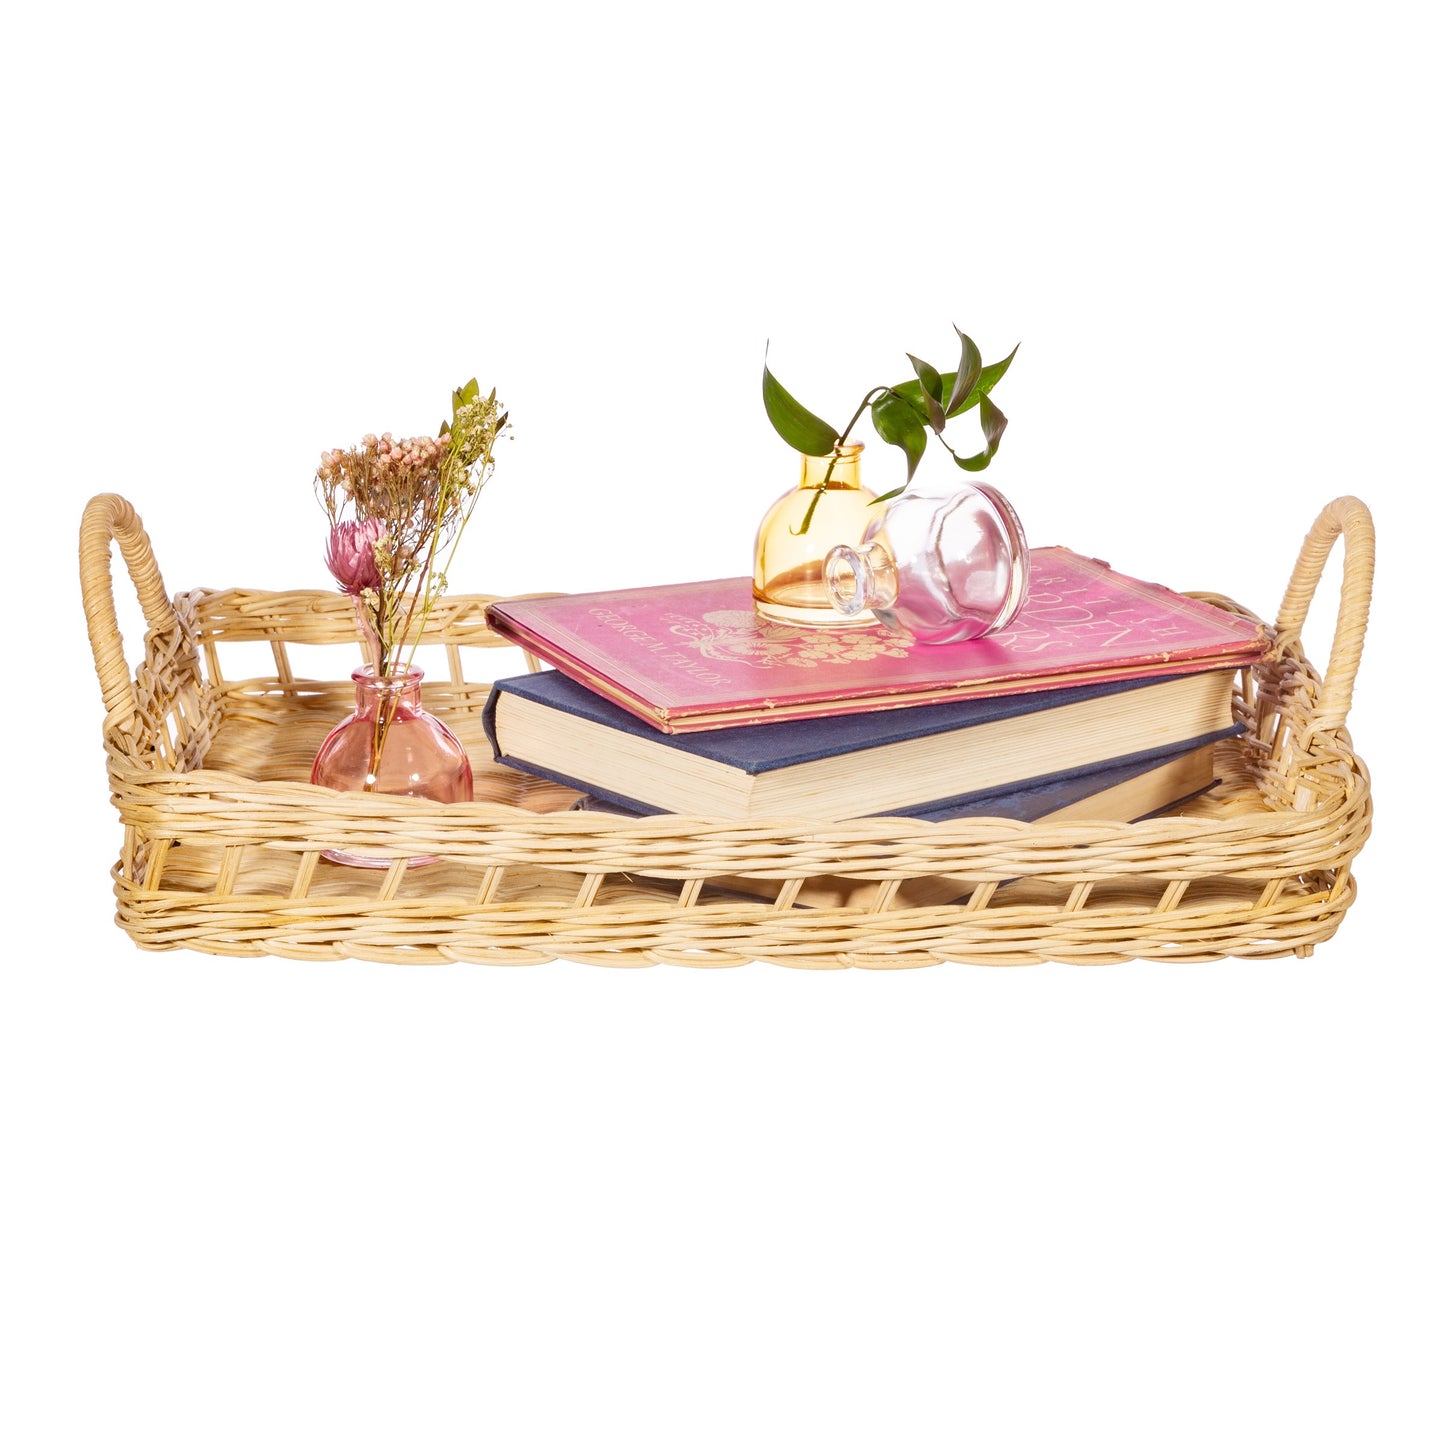 Decorative rattan tray